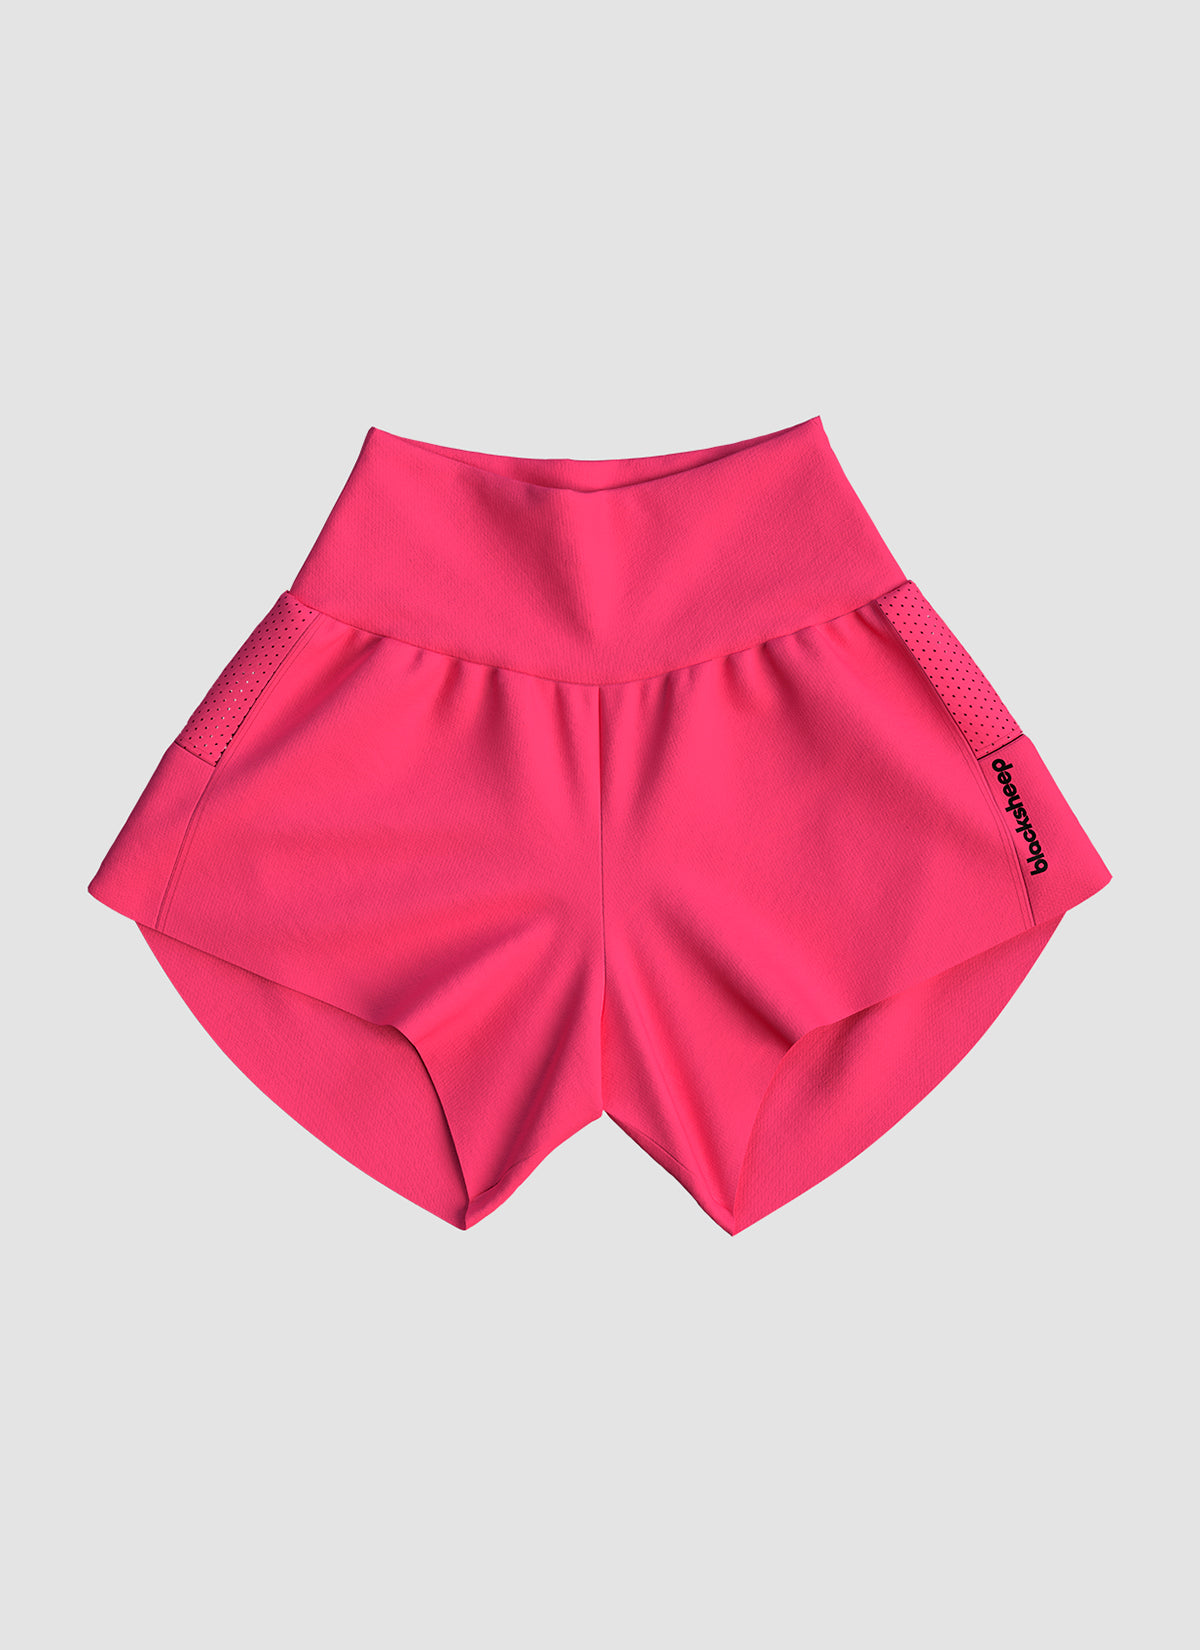 Women's Dry 4" Short - Hot Pink